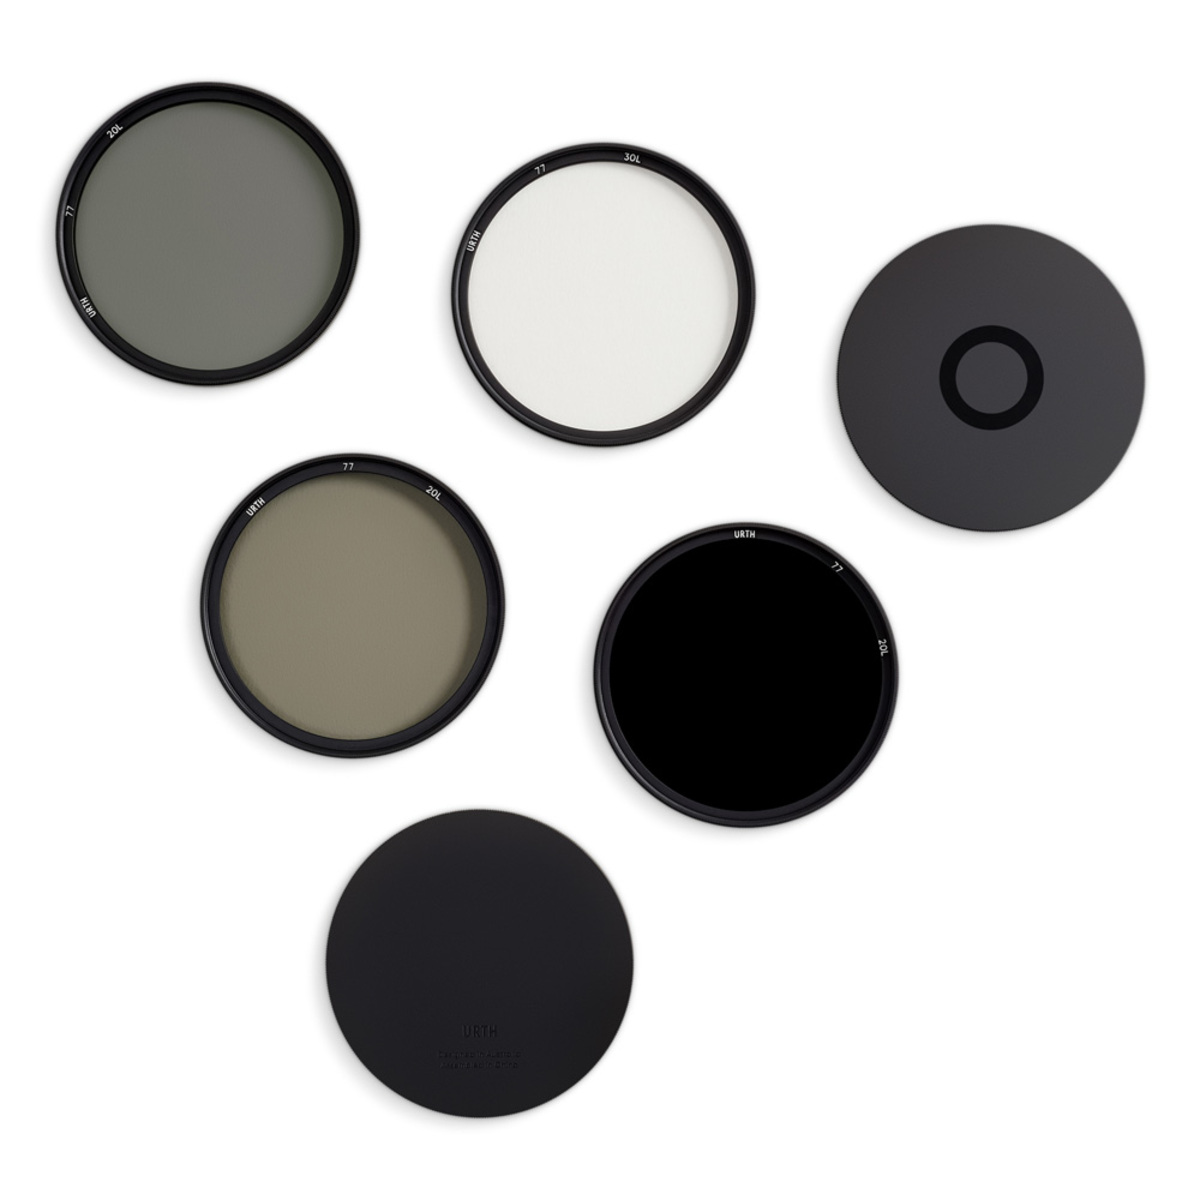 Urth 77mm UV, Circular Polarizing (CPL), ND8, ND1000 Objektivfilter Kit (Plus+)